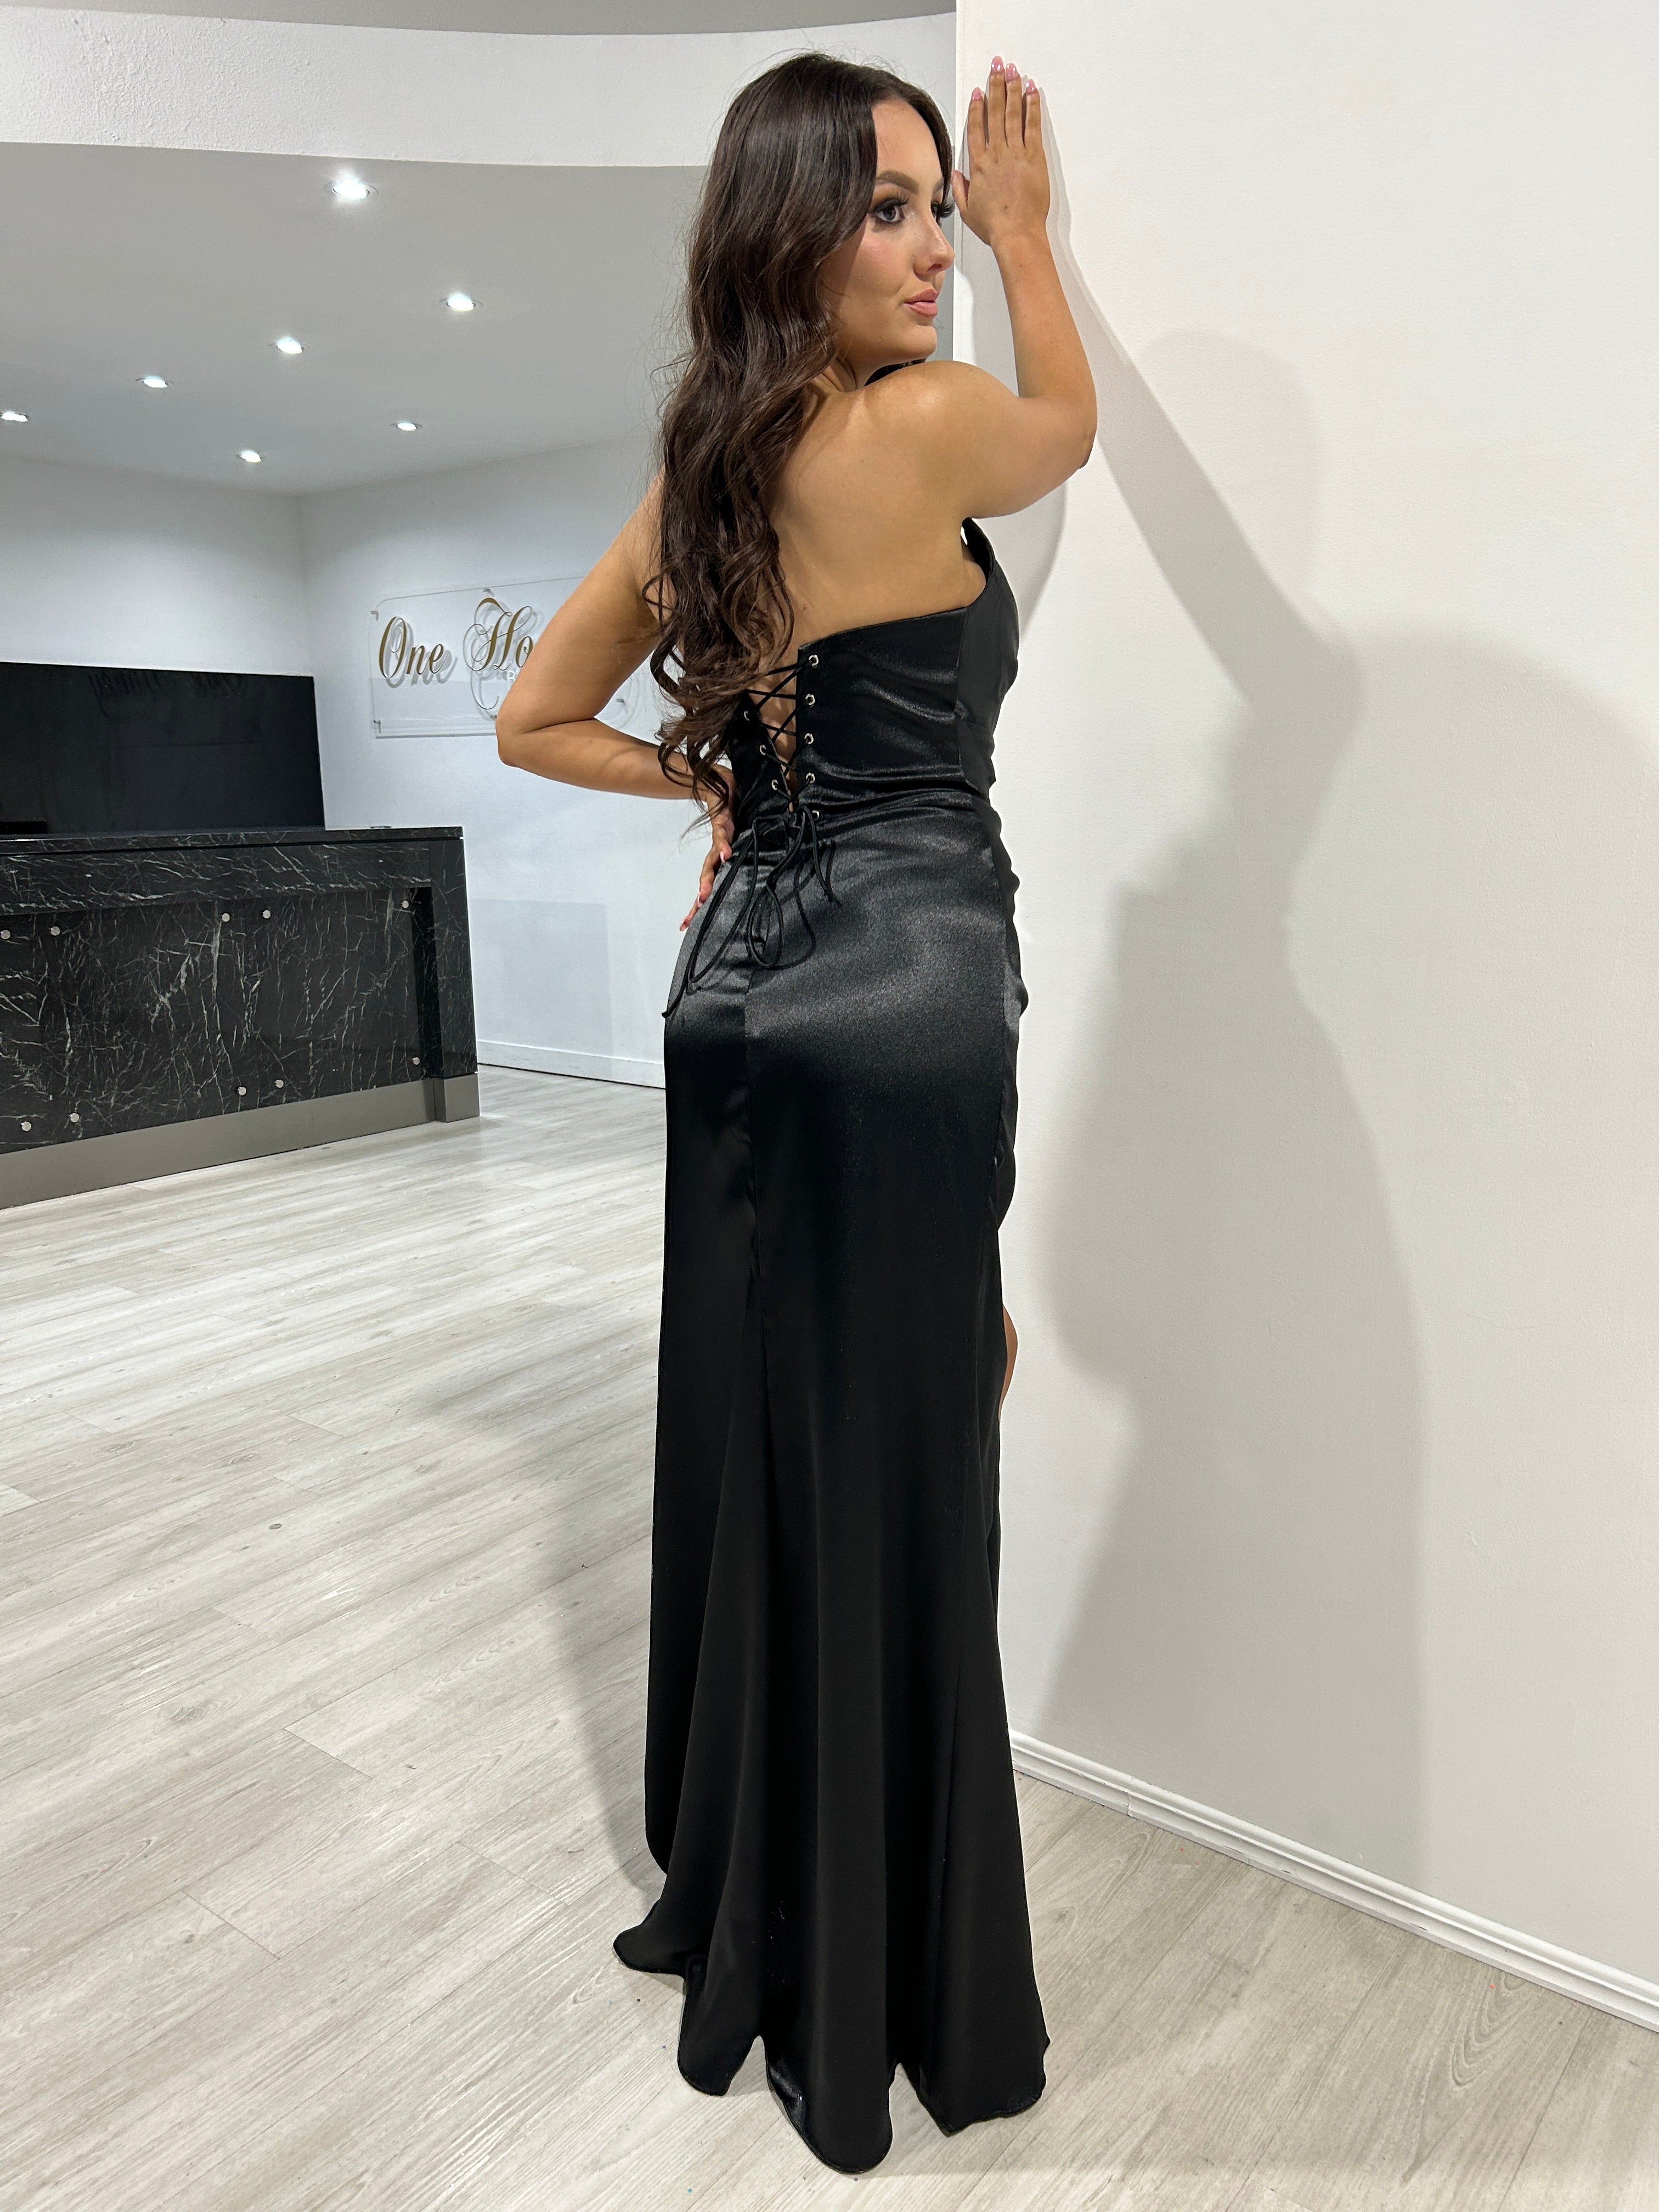 Honey Couture ELVIRA Black Strapless Silky Embellished Corset Mermaid Formal Dress